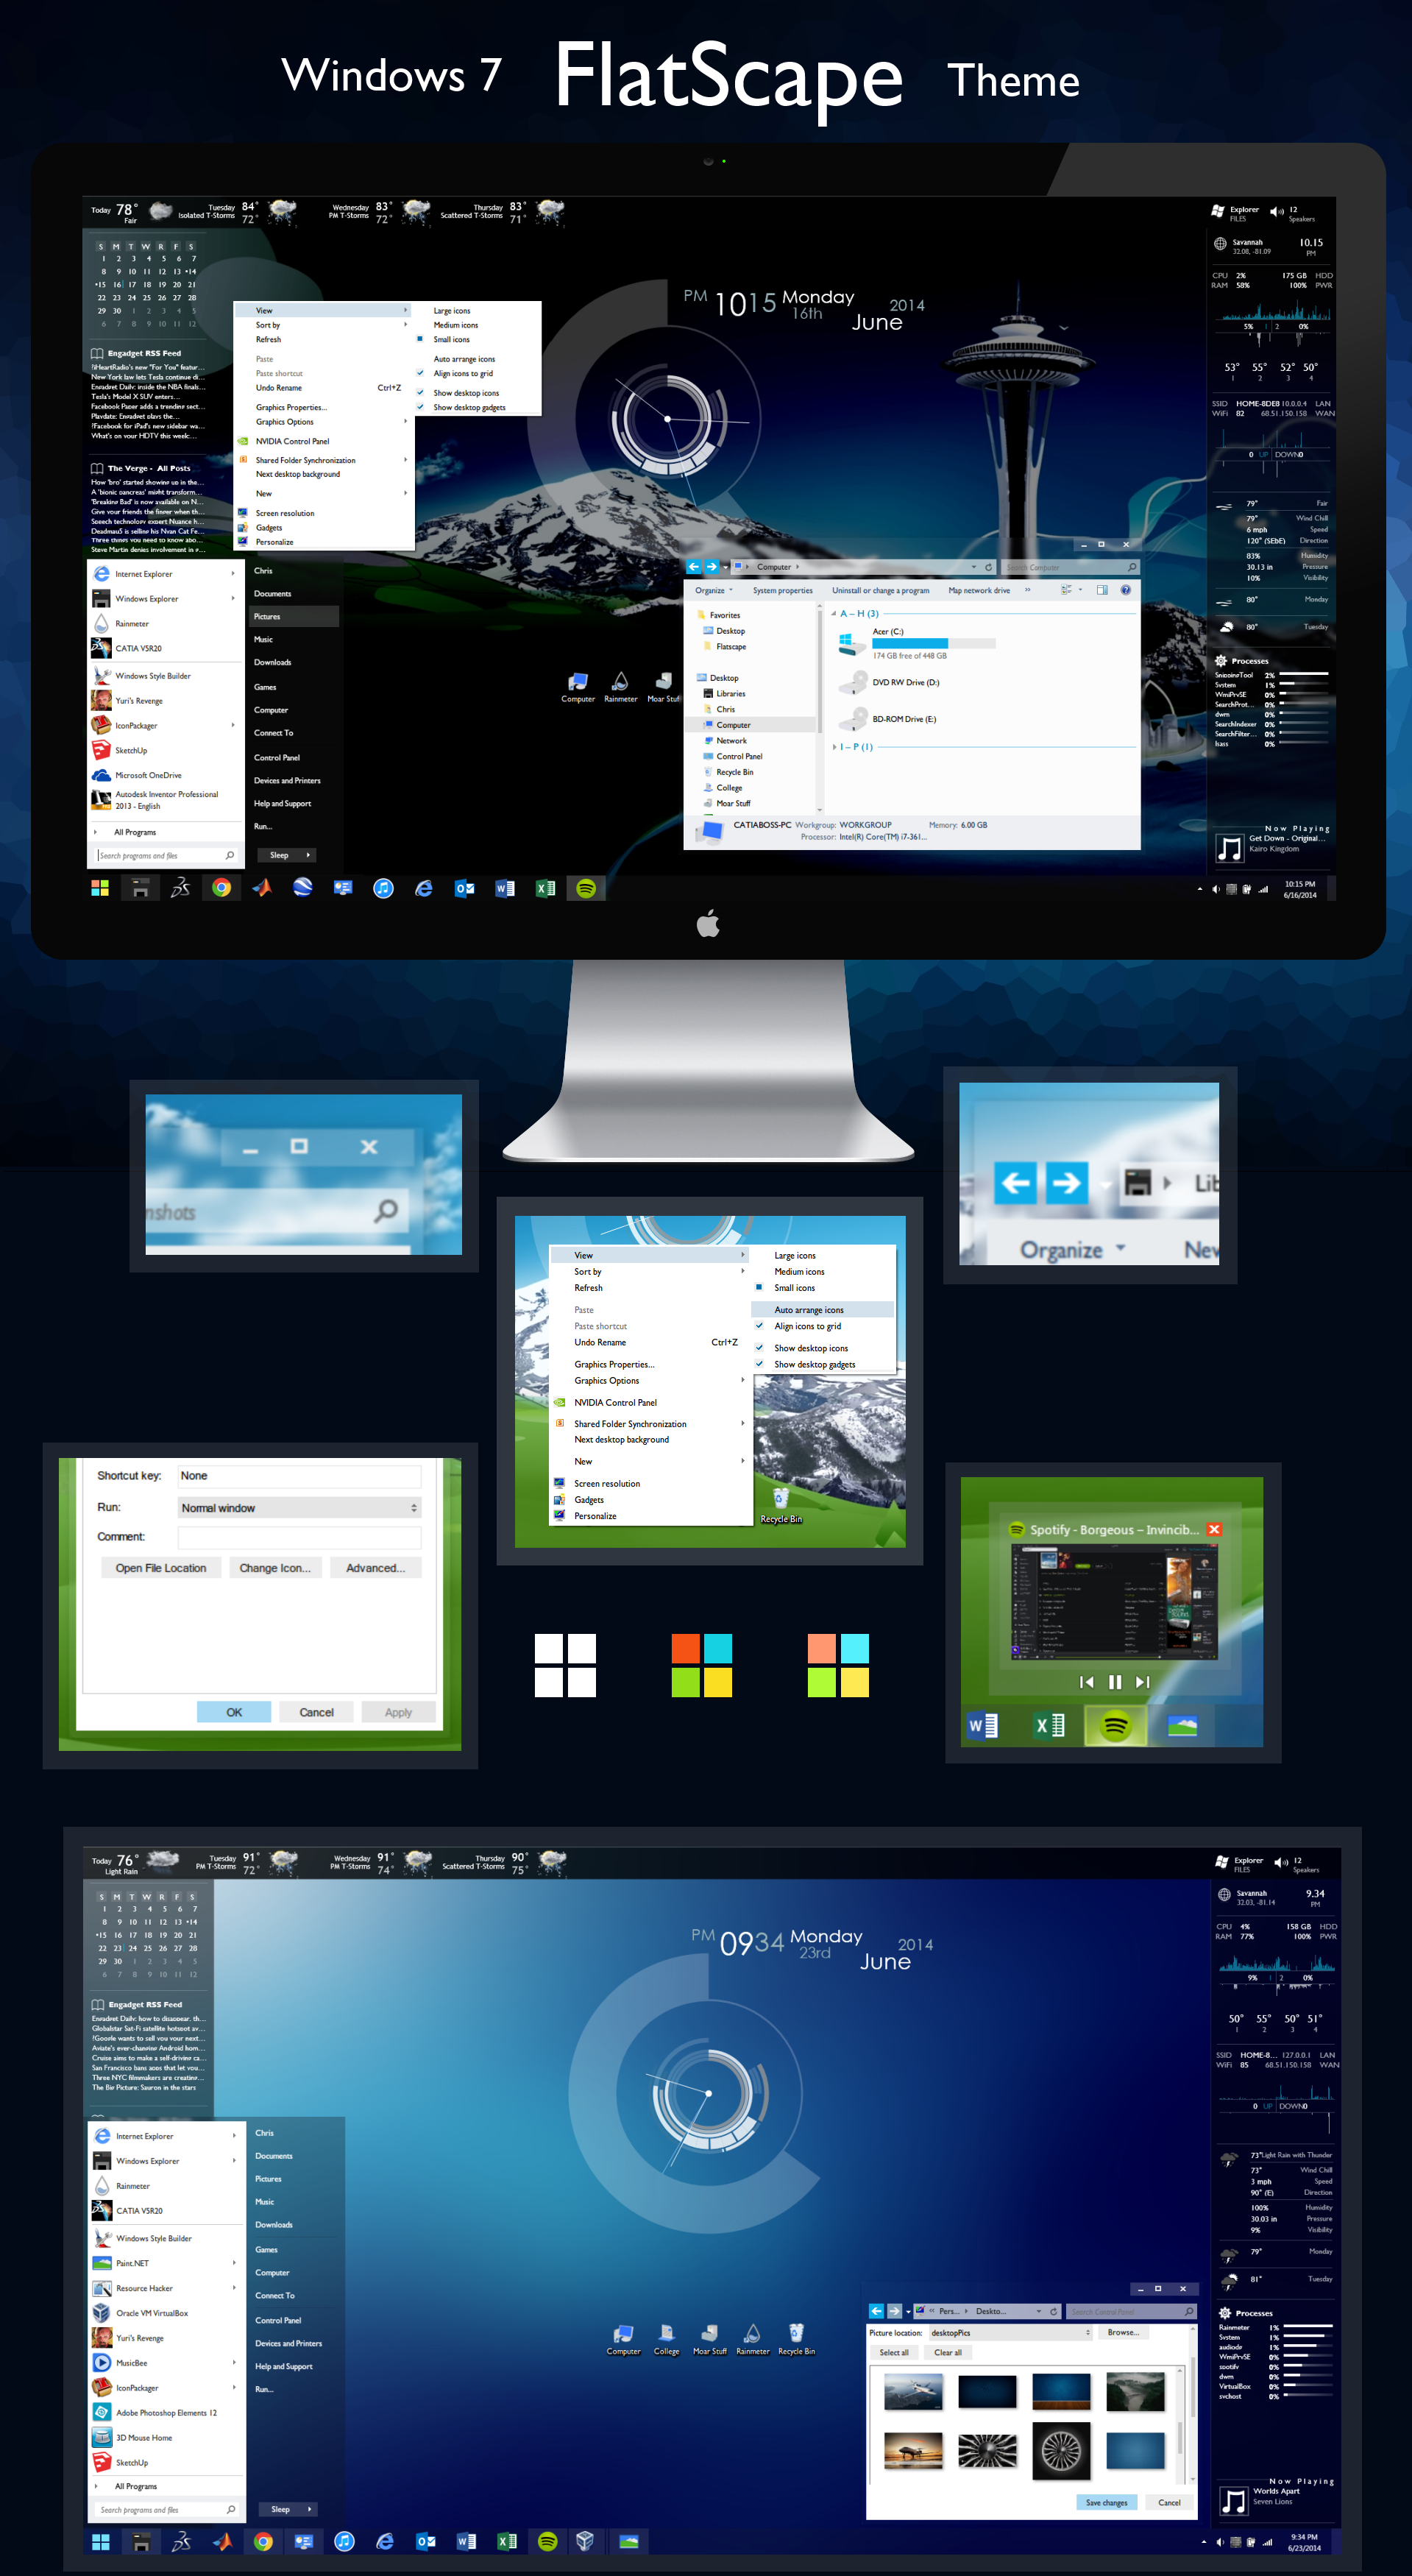 FlatScape Theme for Windows 7